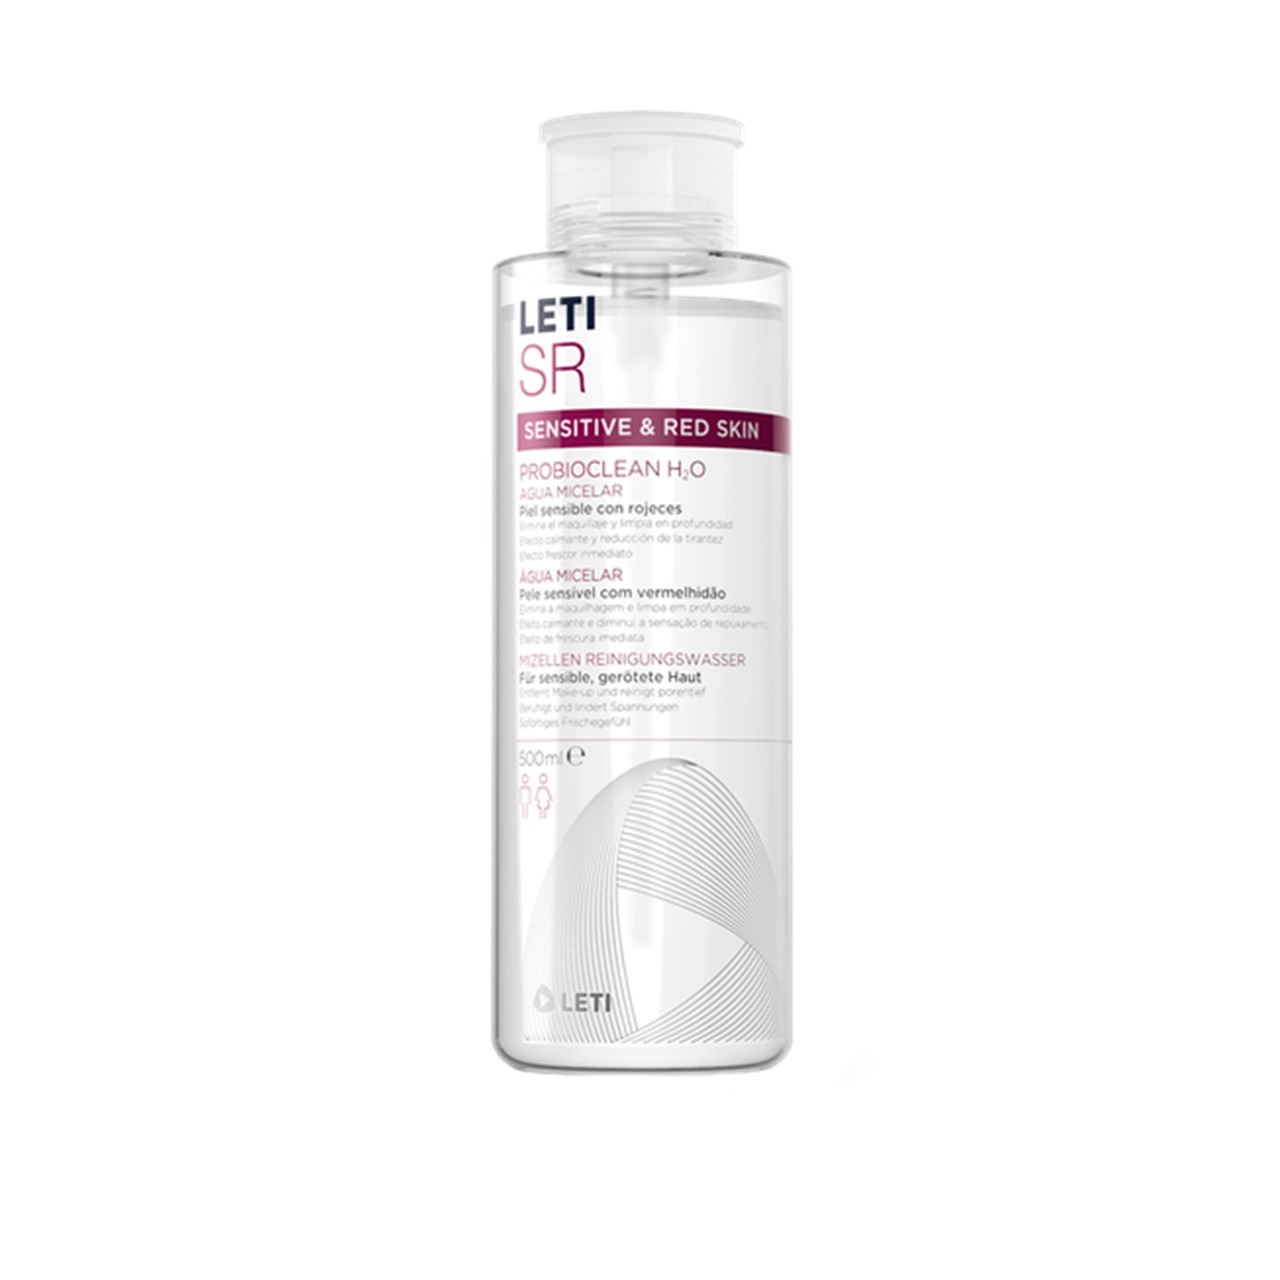 LETI SR Sensitive & Red Skin ProbioClean H2O Micellar Water 500ml (16.91fl oz)